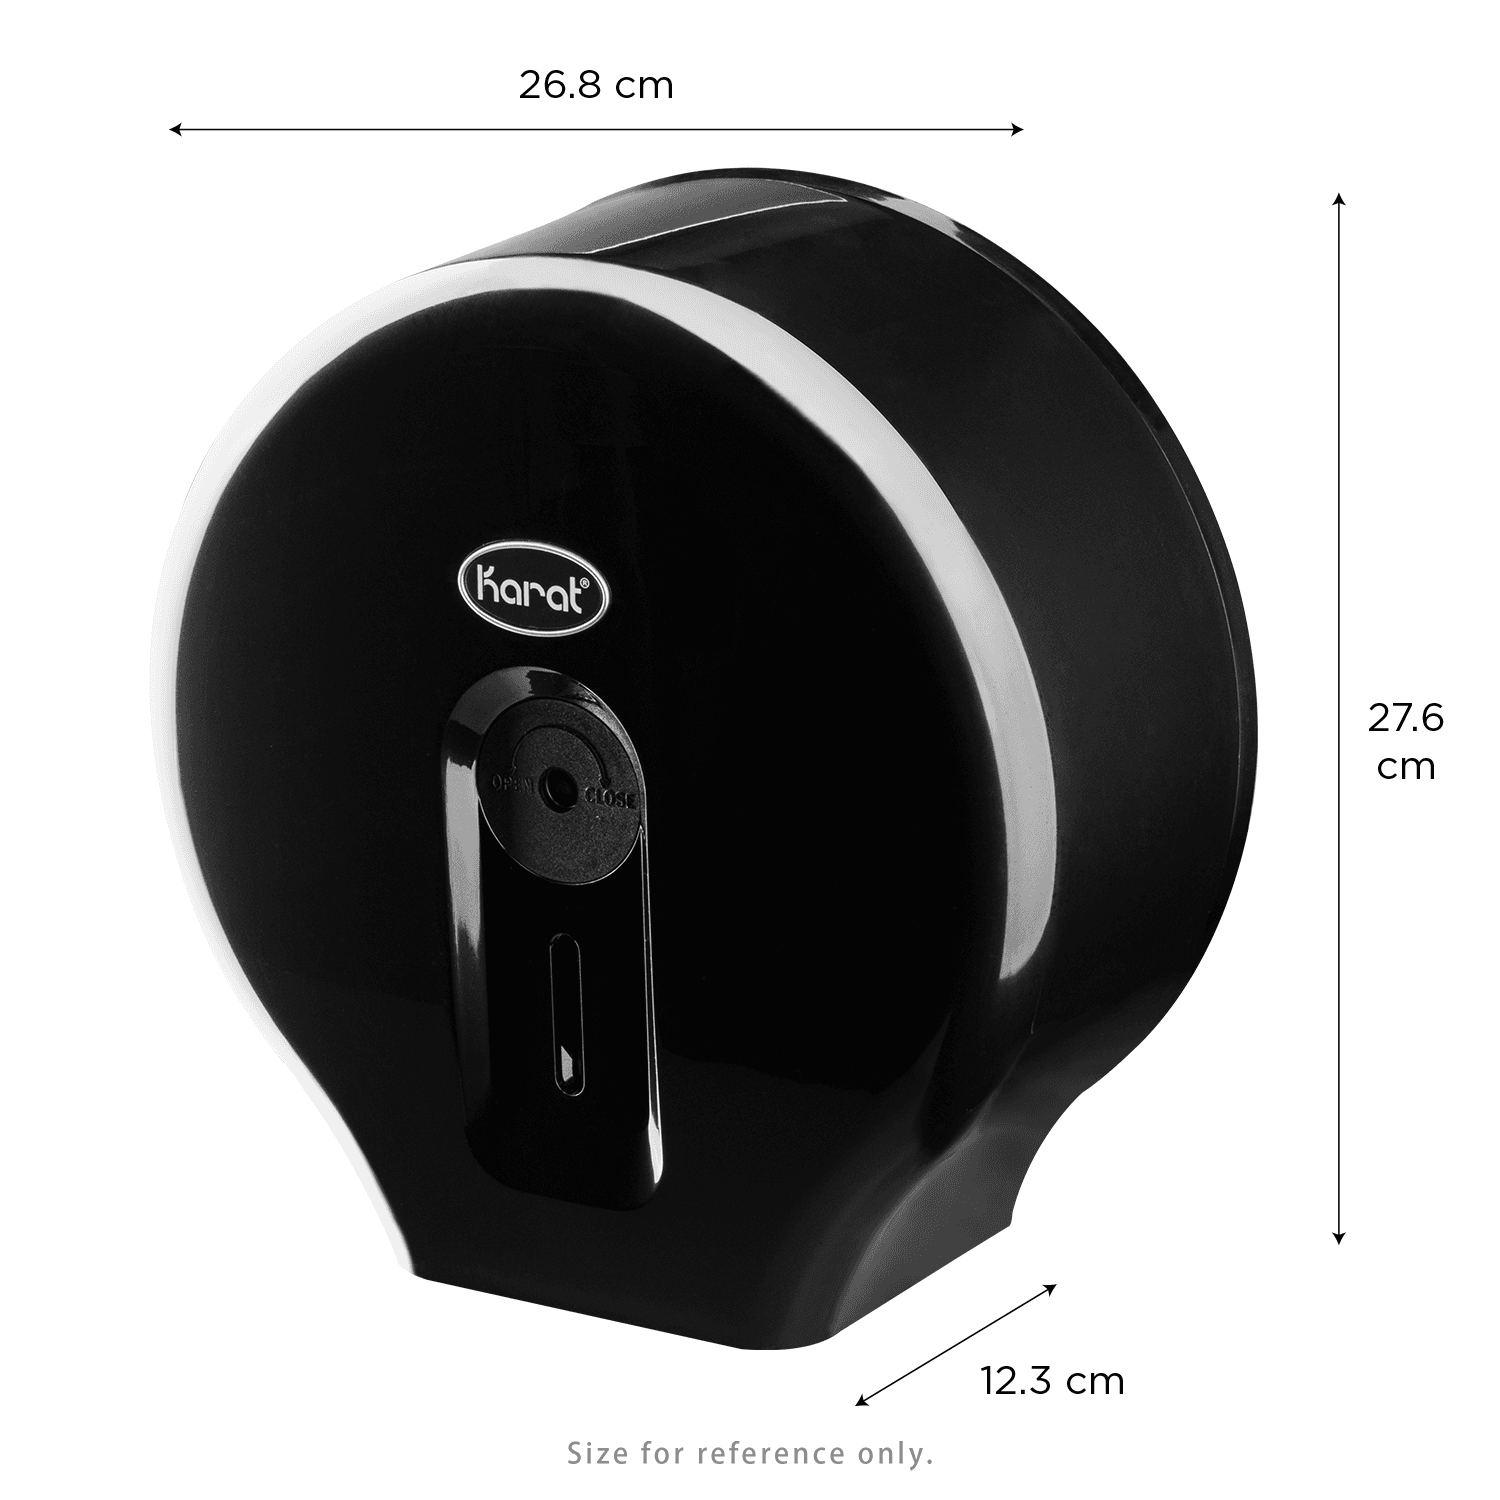 Karat 10" Jumbo Roll Tissue Dispenser, Black - 1 unit